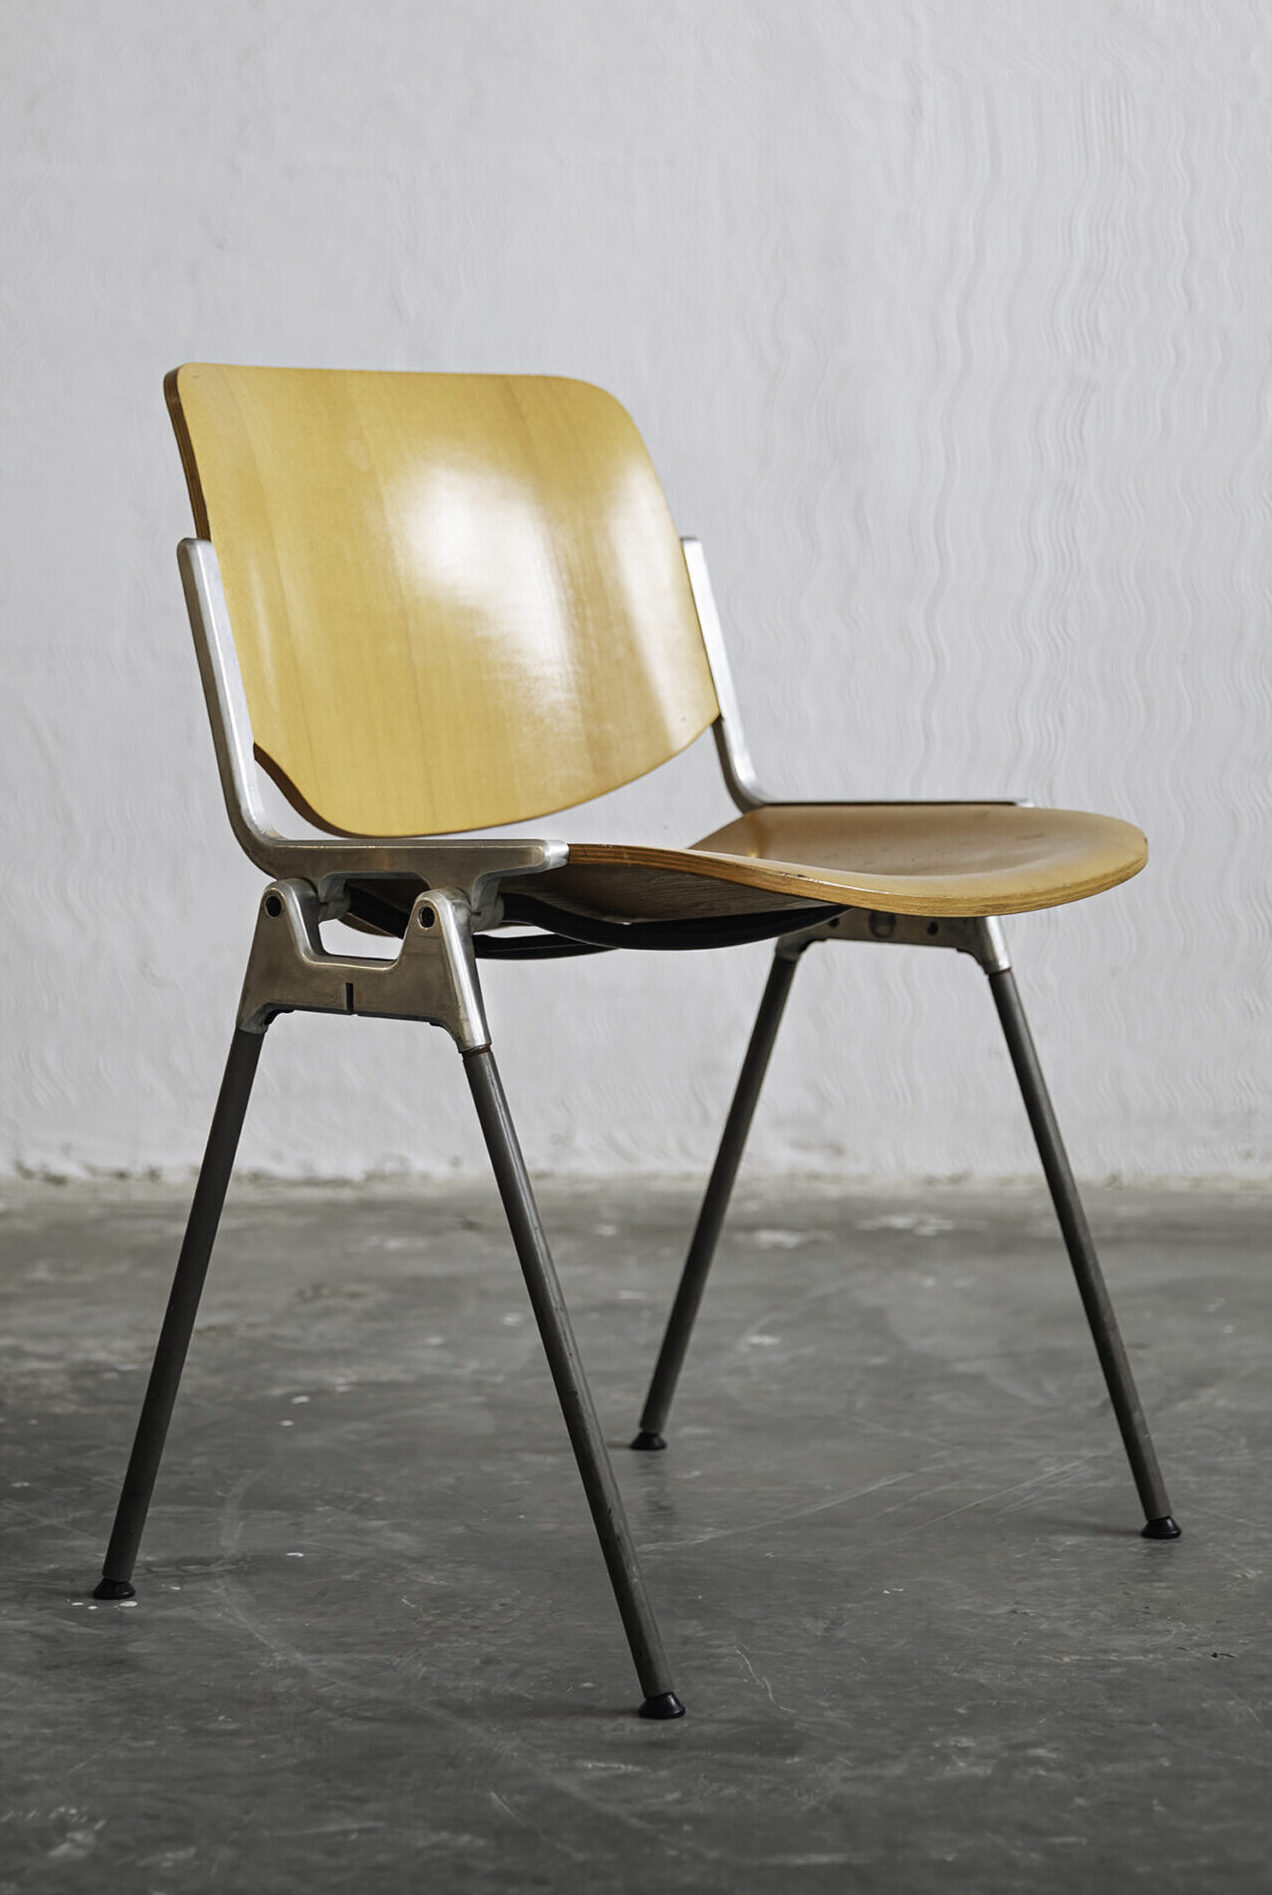 Studio82.ro - Equipment Rental - ANONIMA CASTELLI DSC 106 chair in Beech, 1965